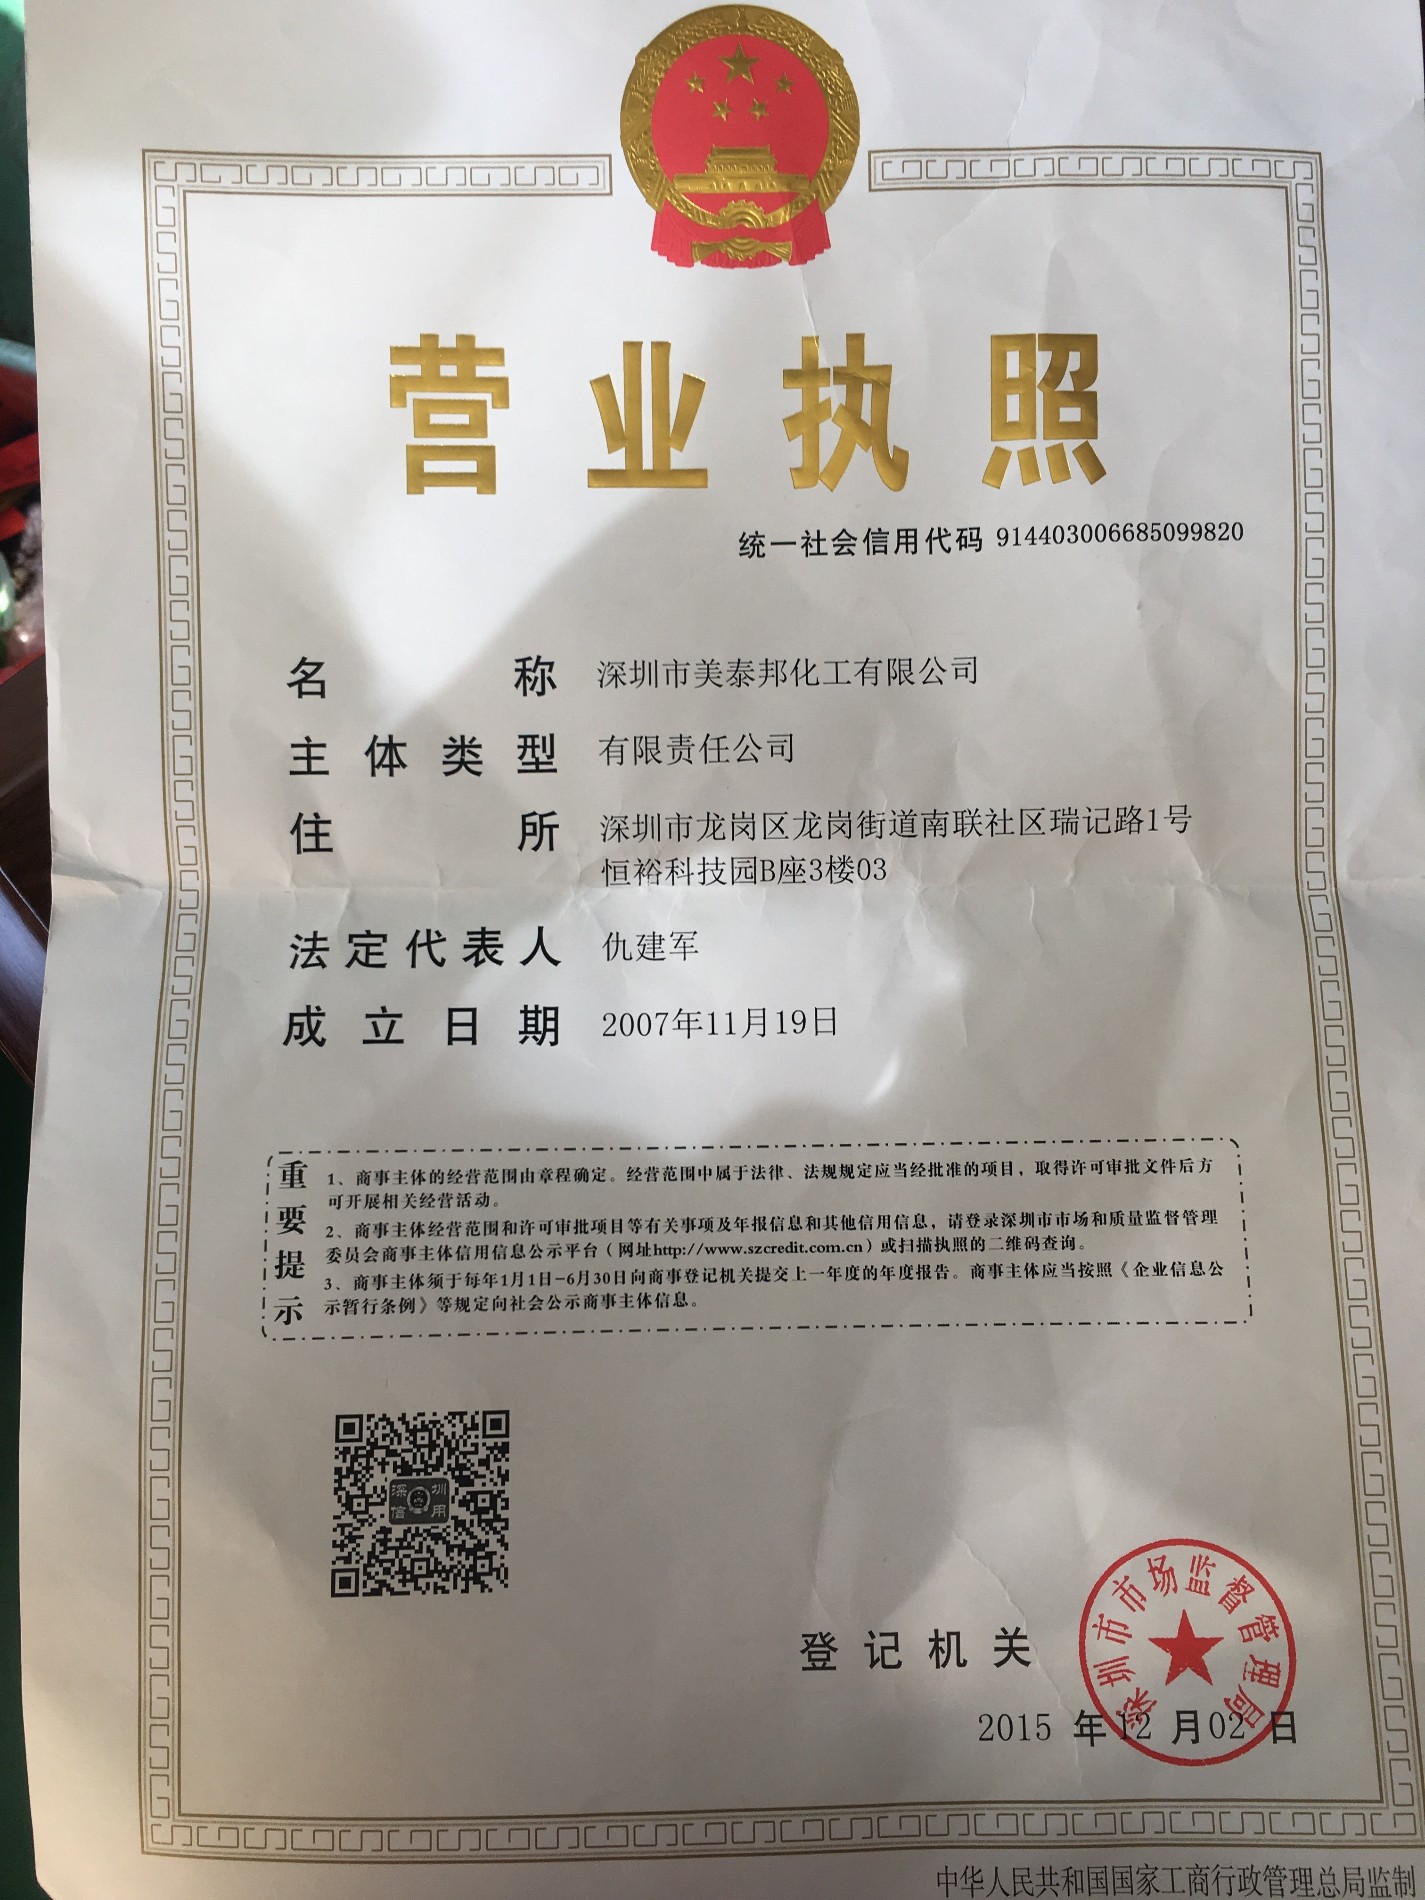 Shenzhen Meitaibang Chemical Co., Ltd License